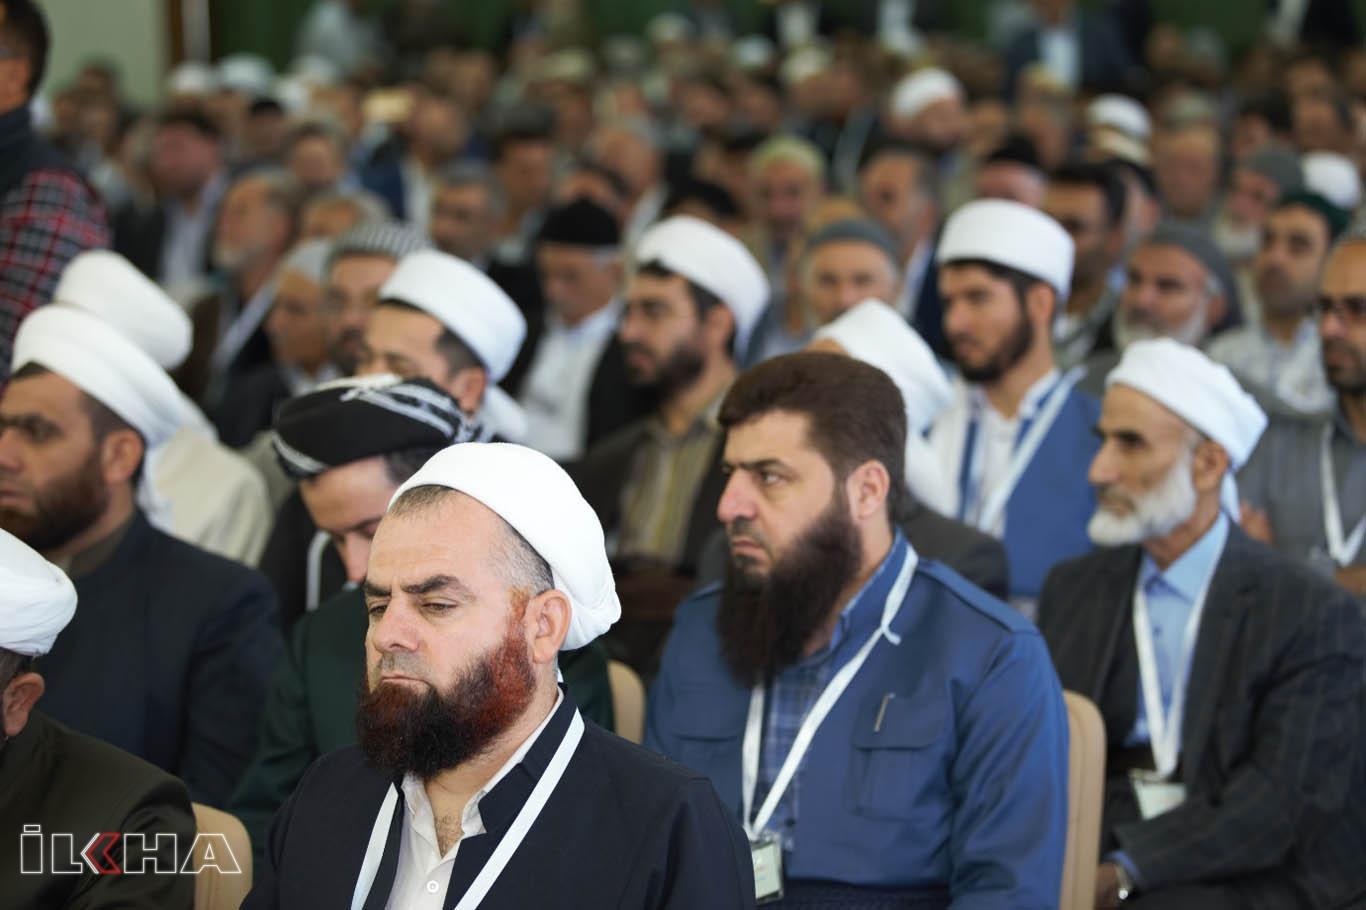 ITTIHAD AL-ULAMA to hold "Fourth Meeting of Scholars"